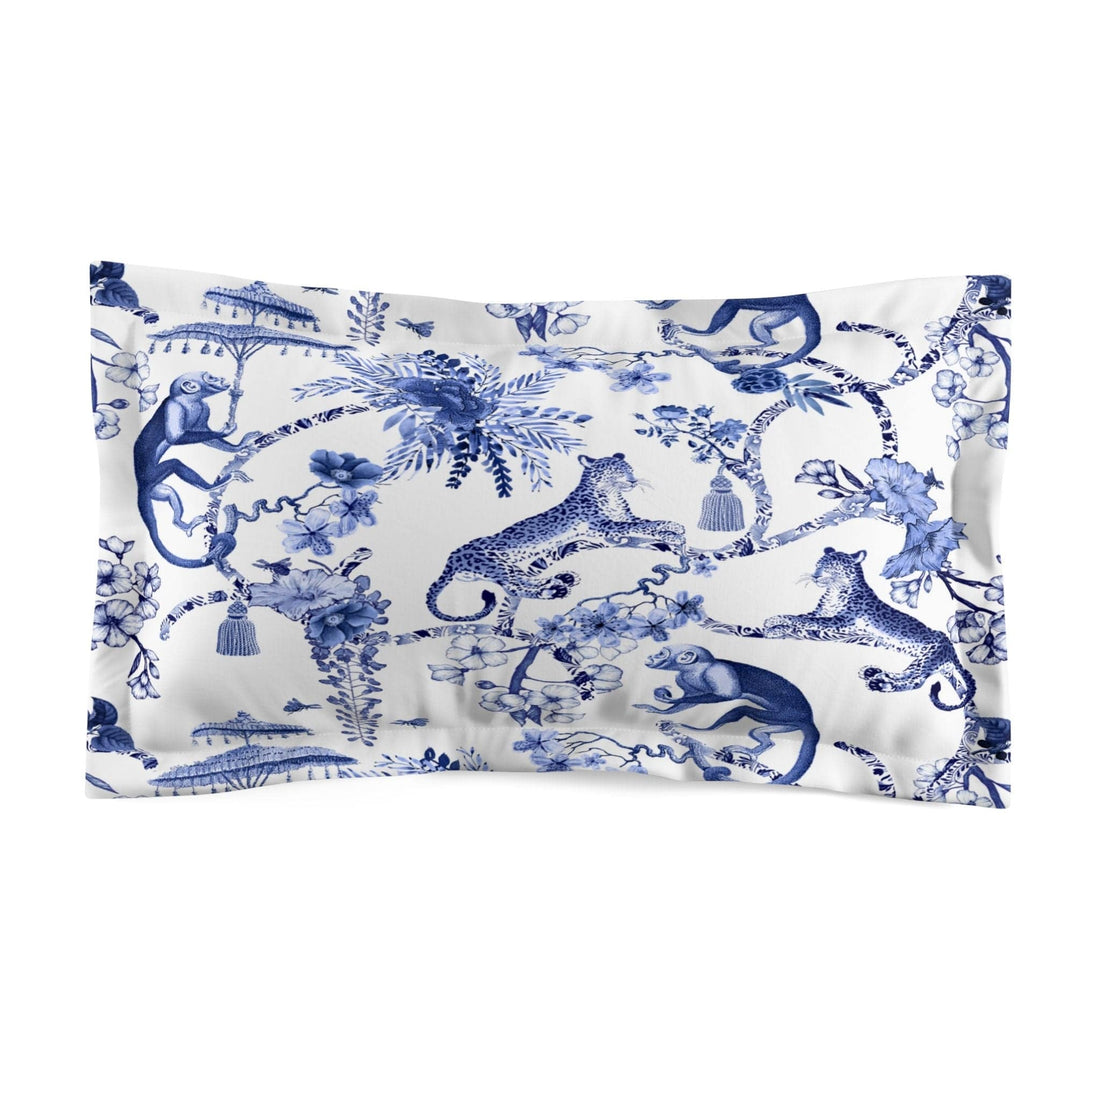 Kate McEnroe New York Chinoiserie Pillow Sham, Botanical Toile Bedding Collection, Chinoiserie Toile Bed Pillows, Floral Blue and White Chinoiserie JunglePillow Shams25997705069546501963